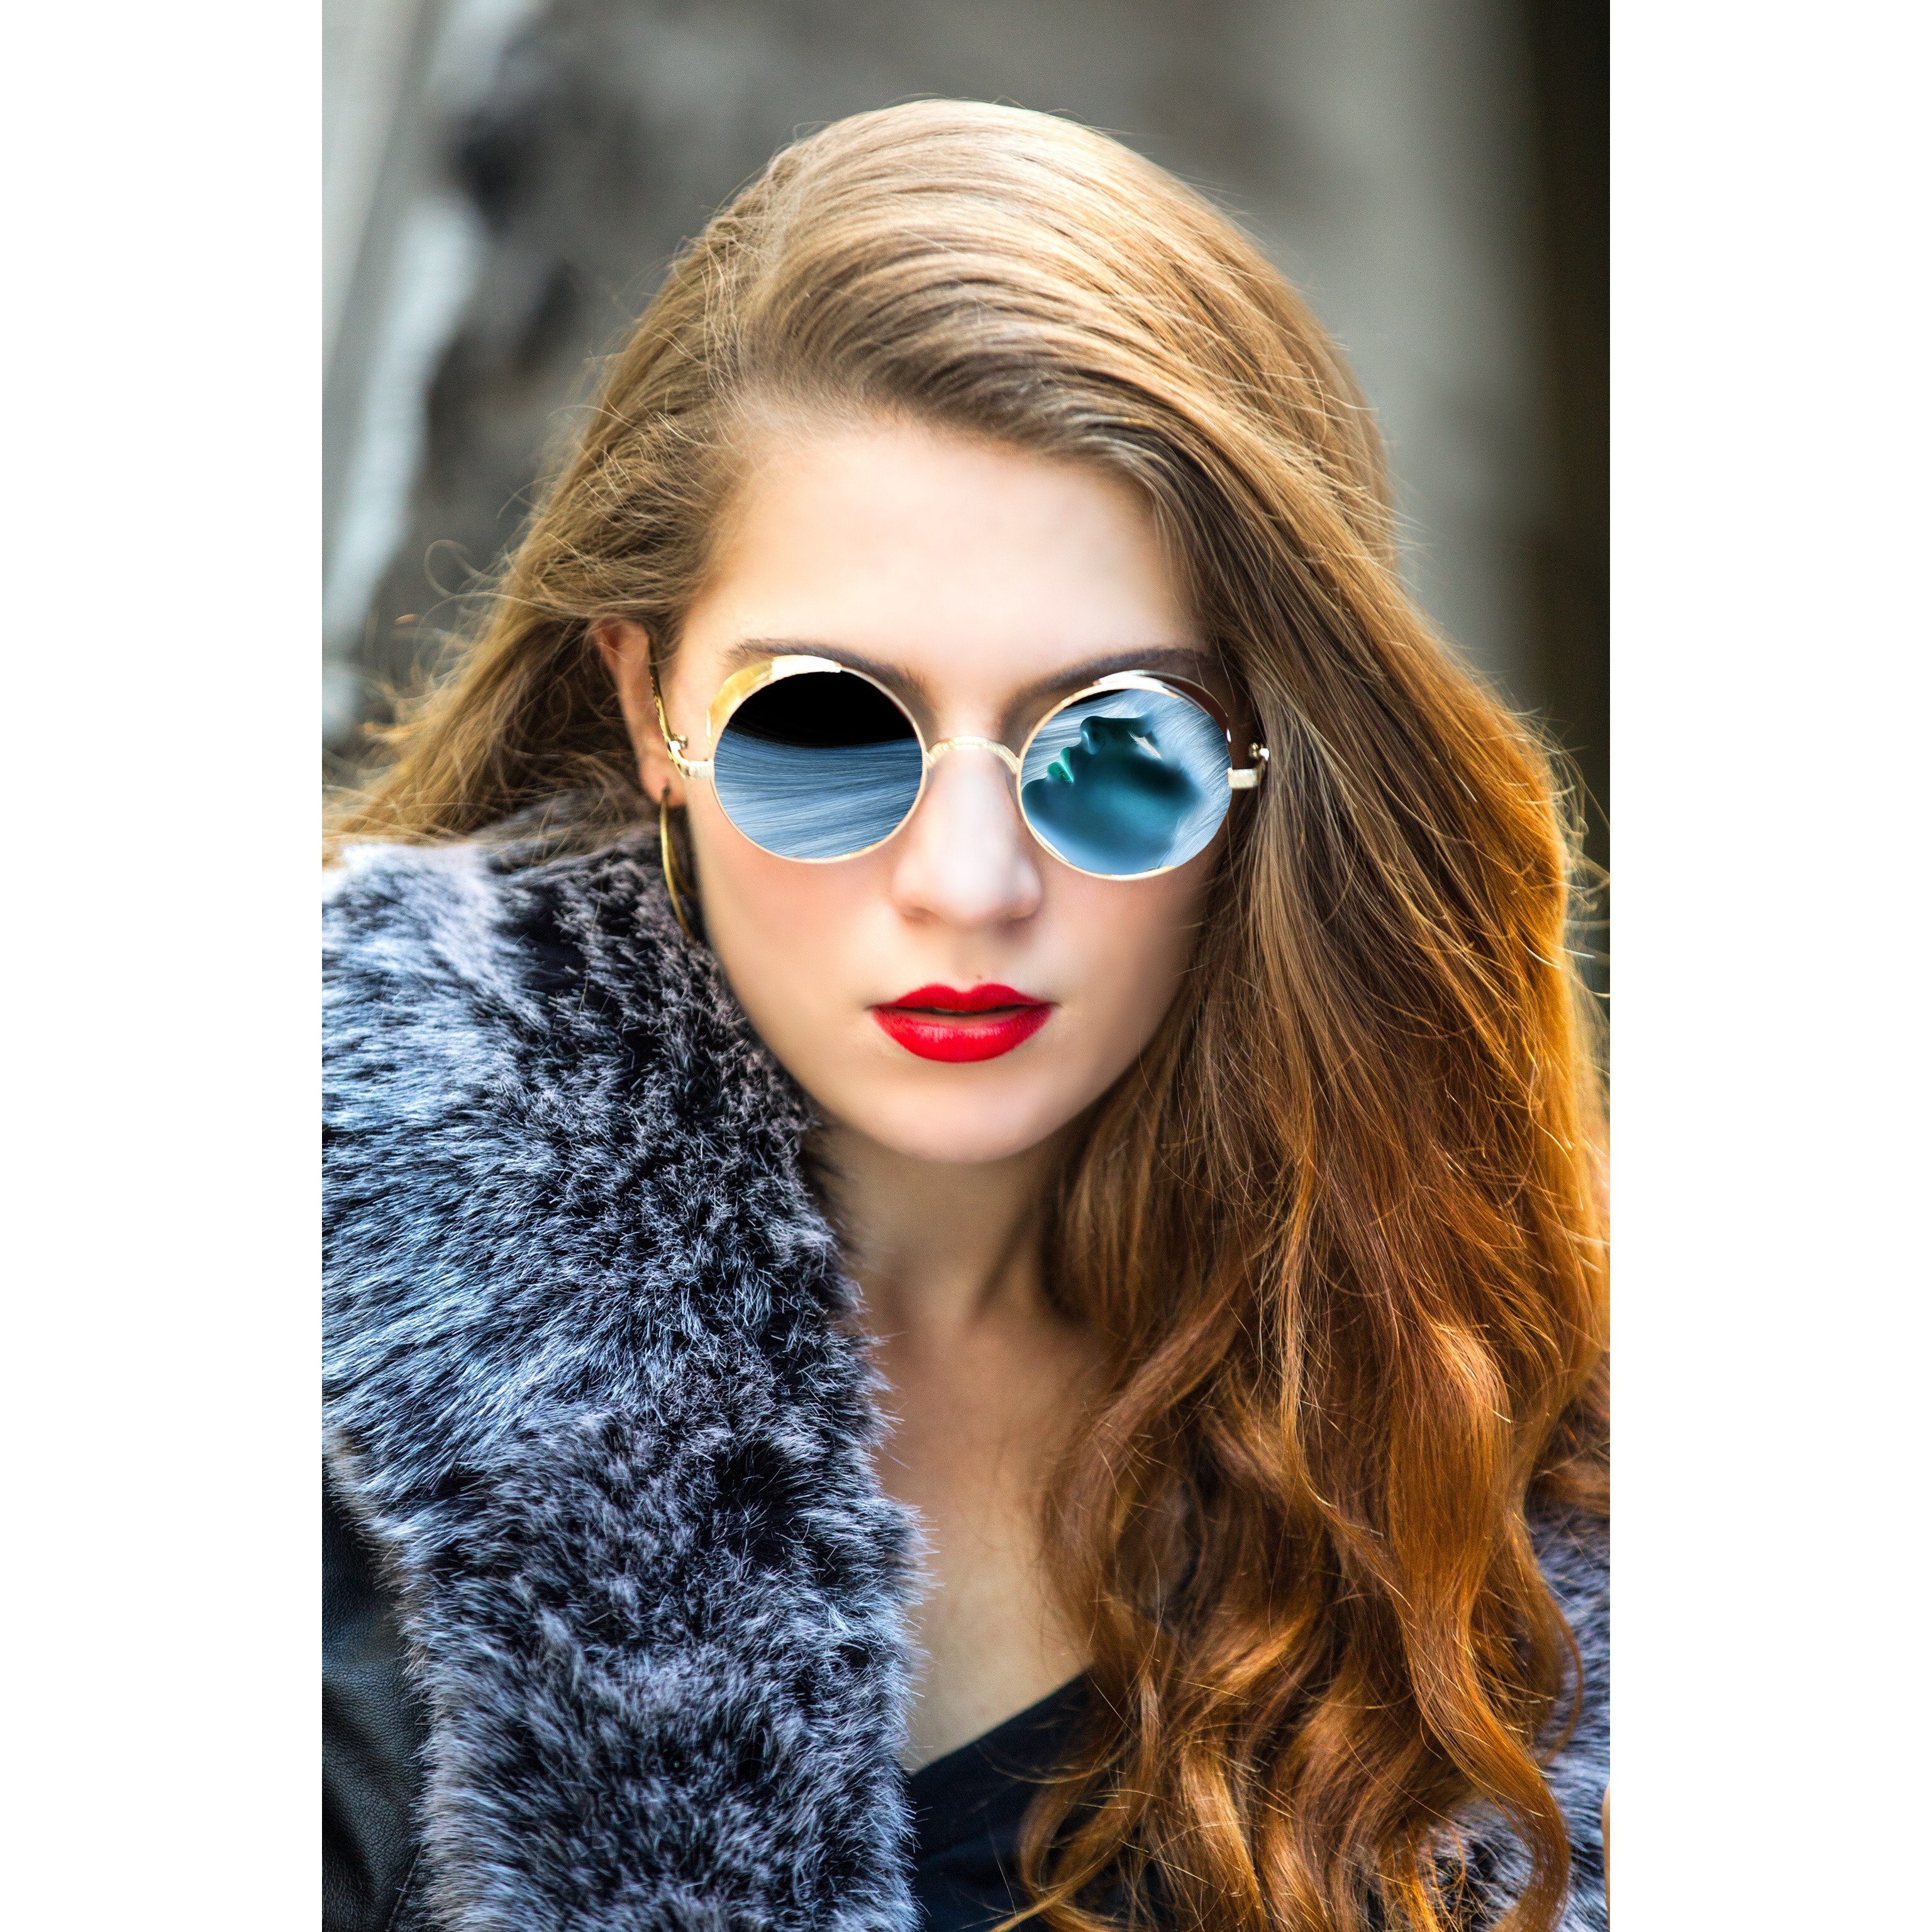 Woman taking selfie wearing round blue sunglasses photo